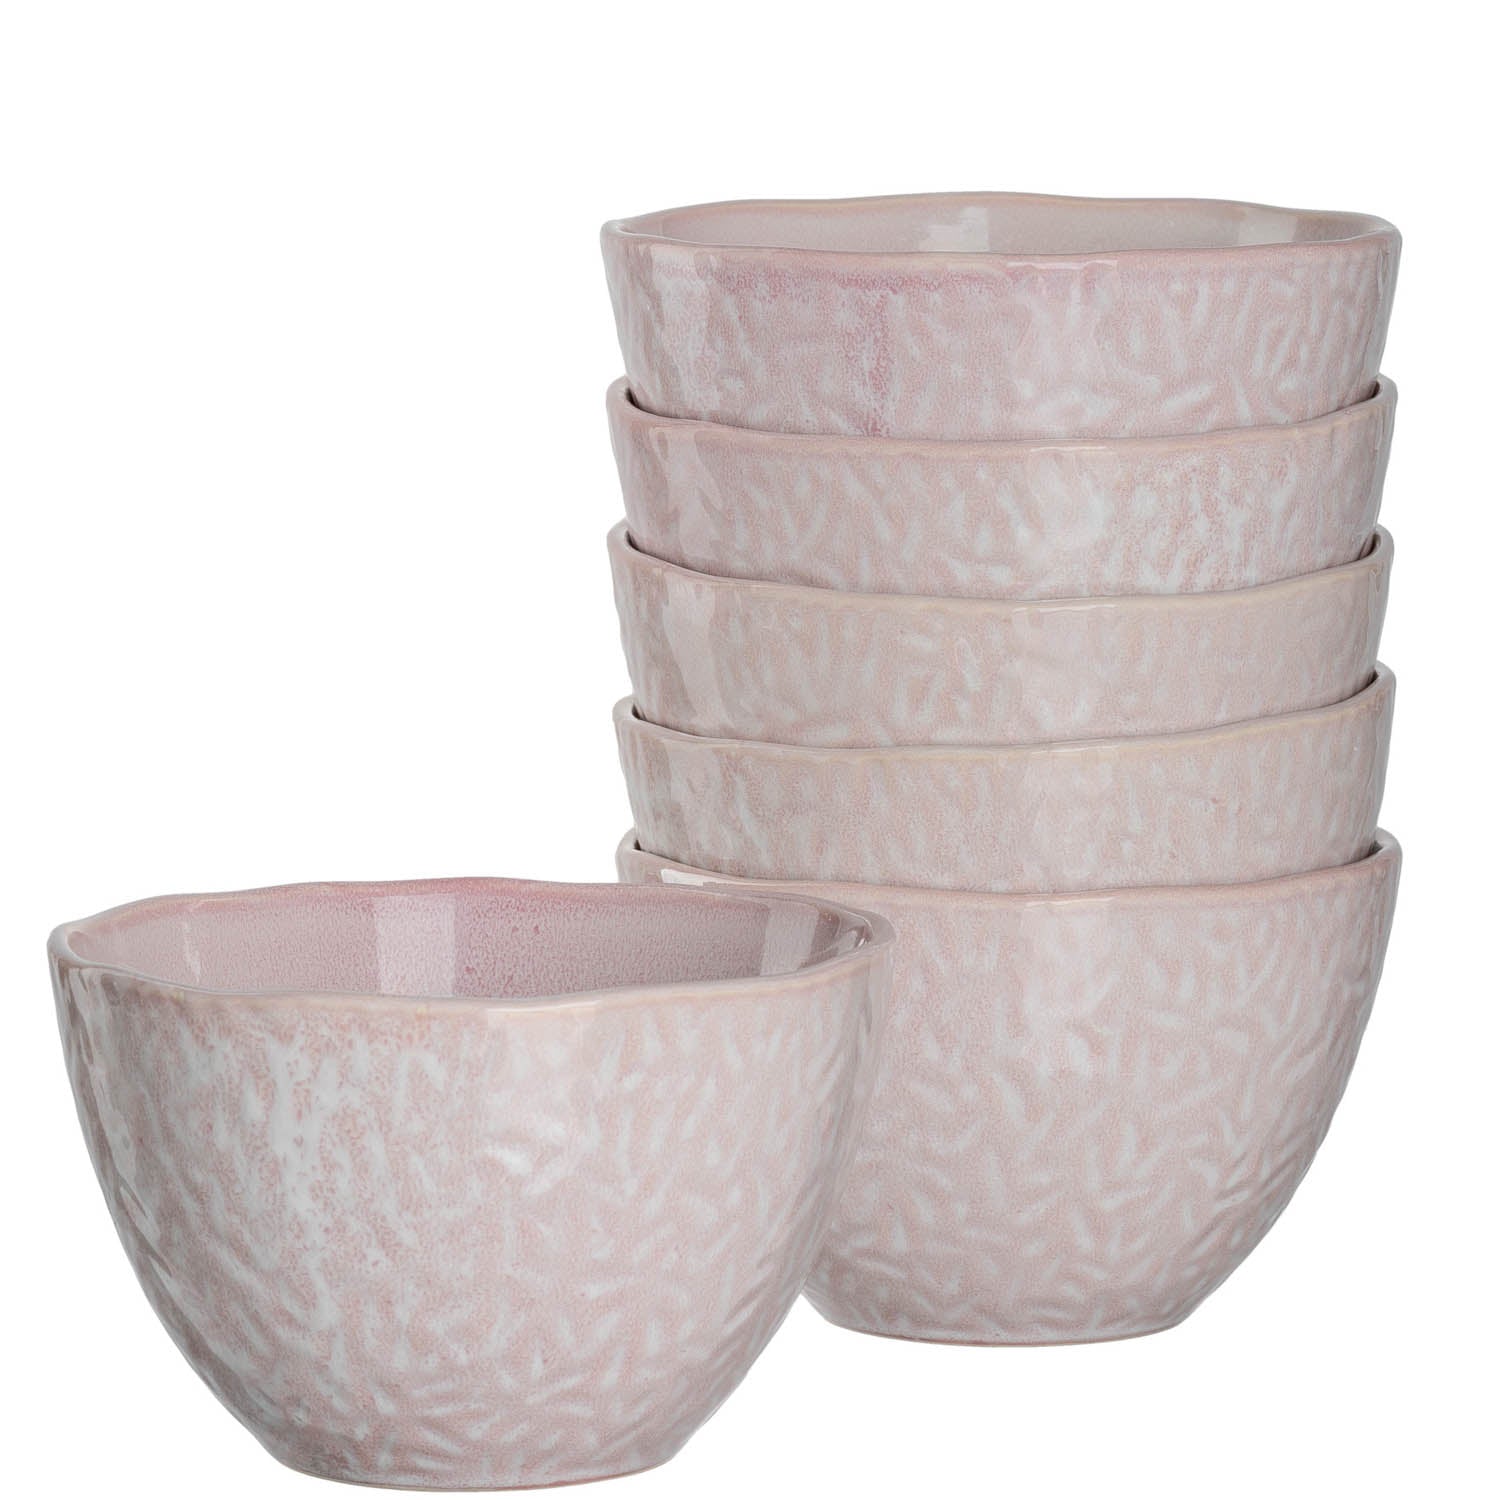 Geschirrset MATERA 24-teilig rosé Keramik